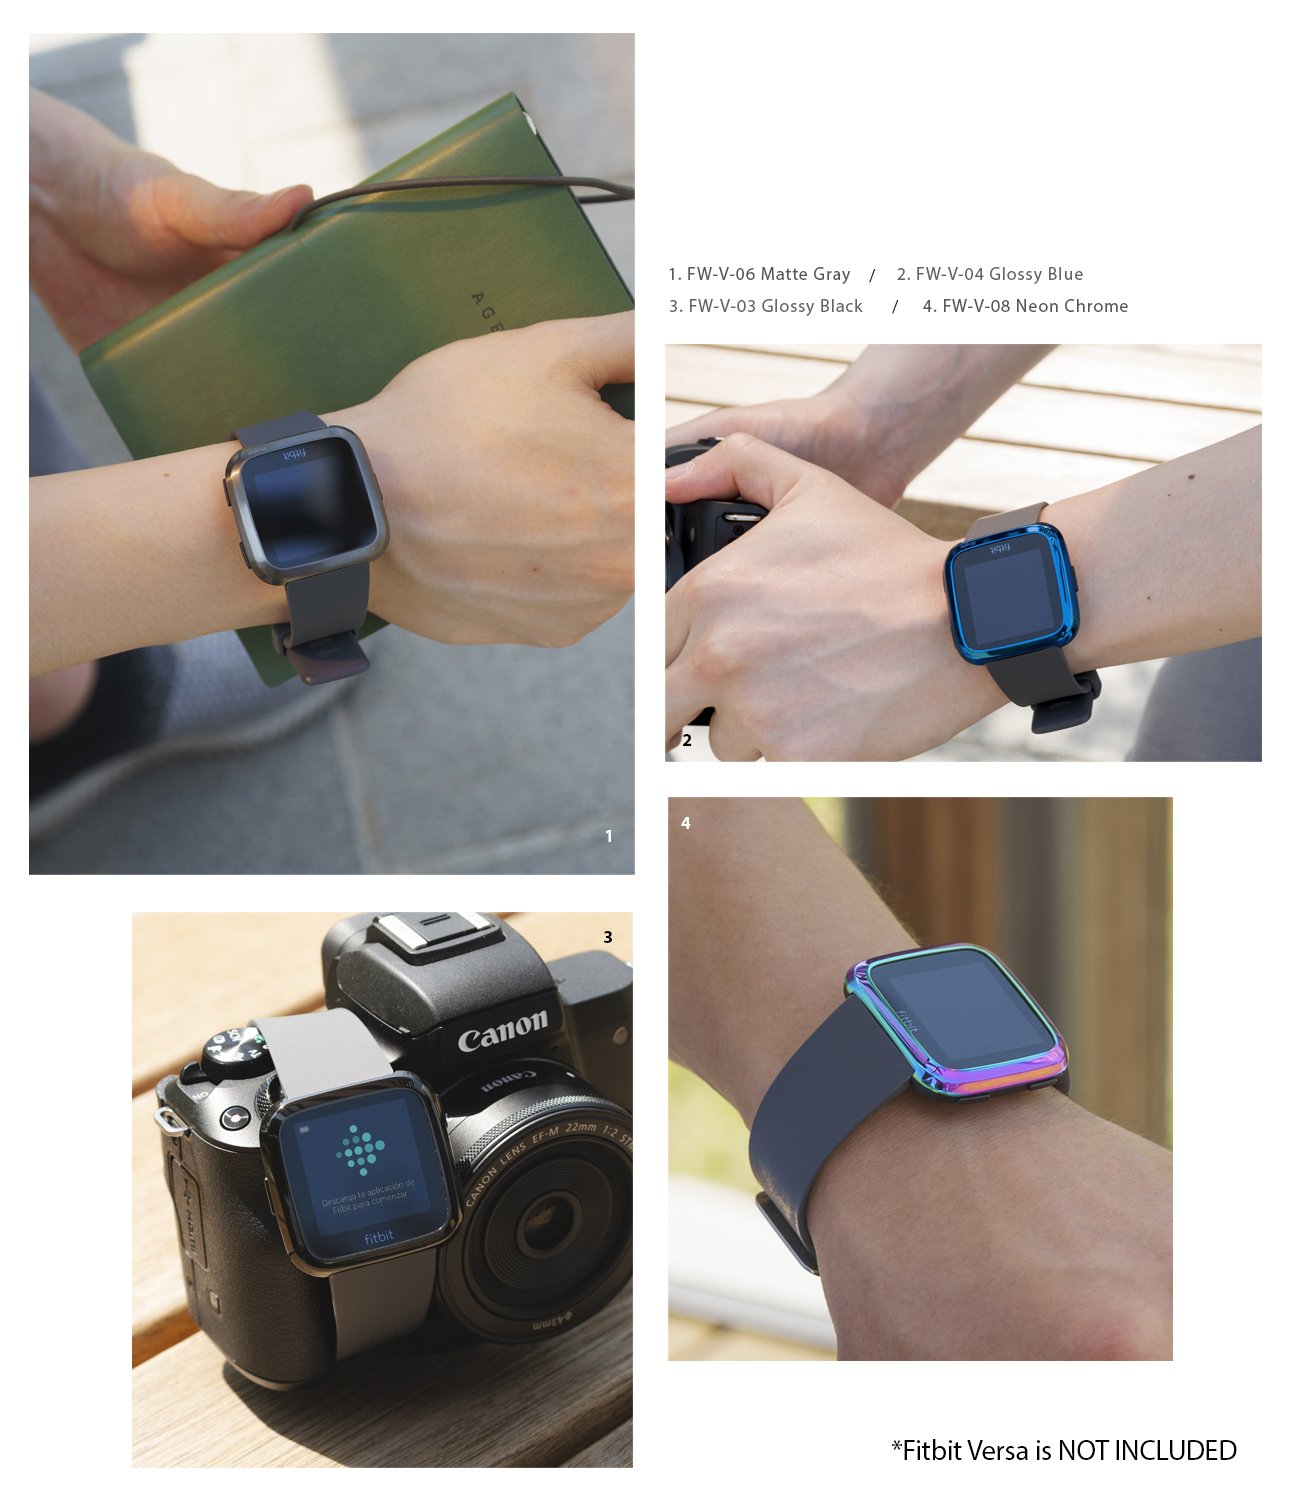 Ringke Bezel Styling Designed for Fitbit Versa Case Cover, Gold - FW-V-05